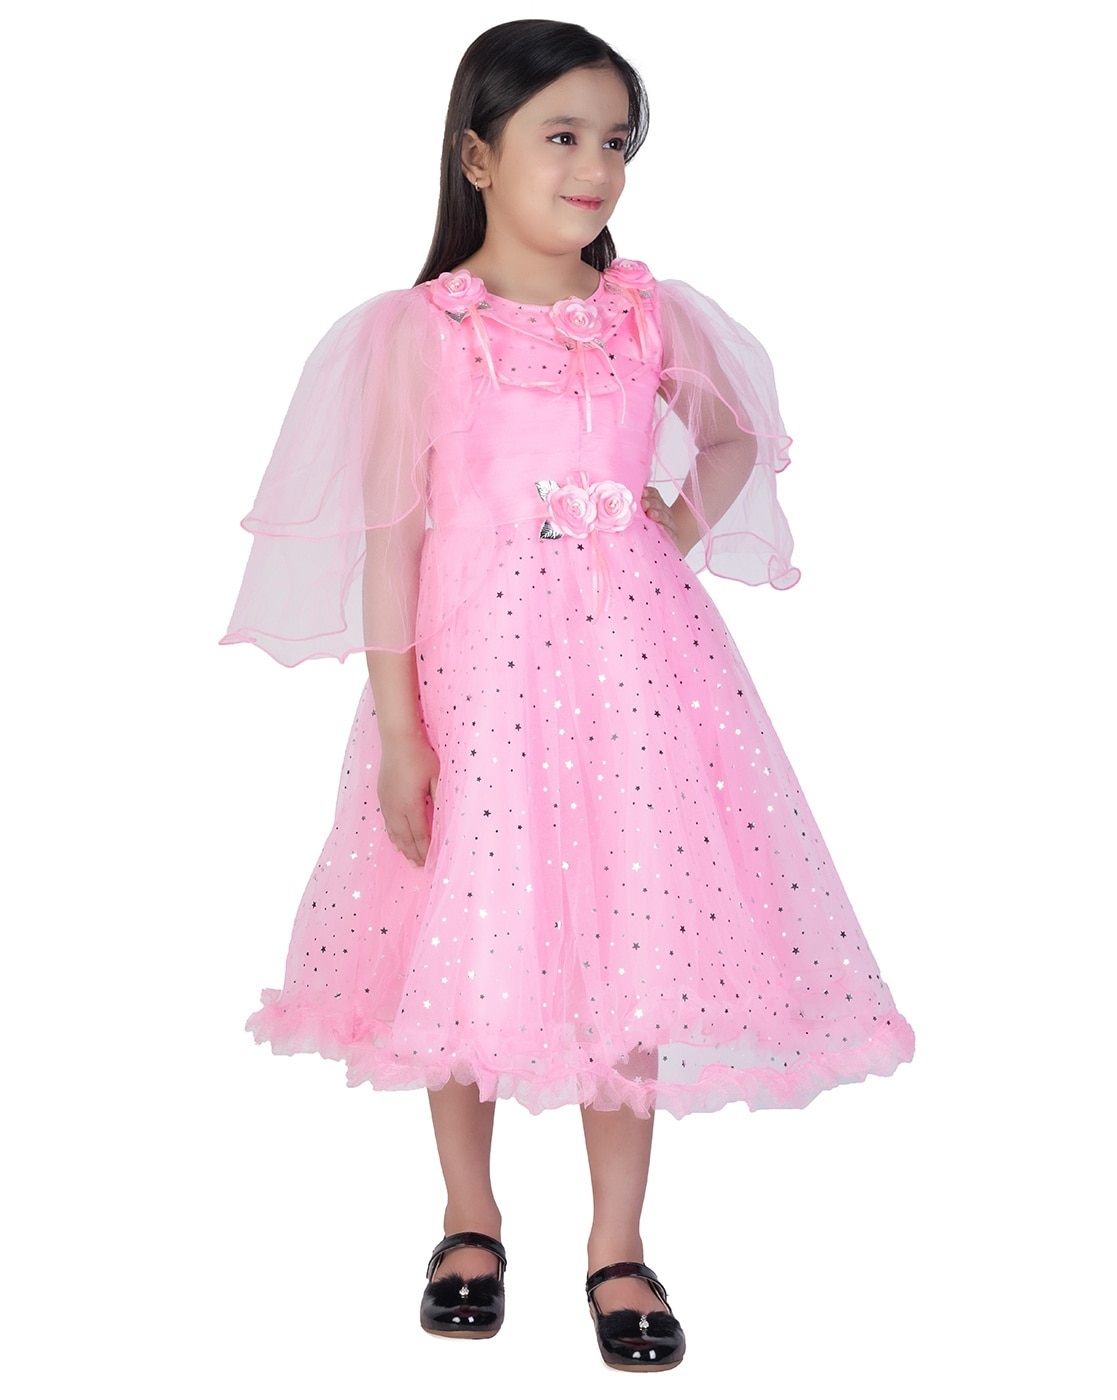 Baby Girl Sone Pari Dresses at Rs 755 / Box in Kolkata | Infanzy